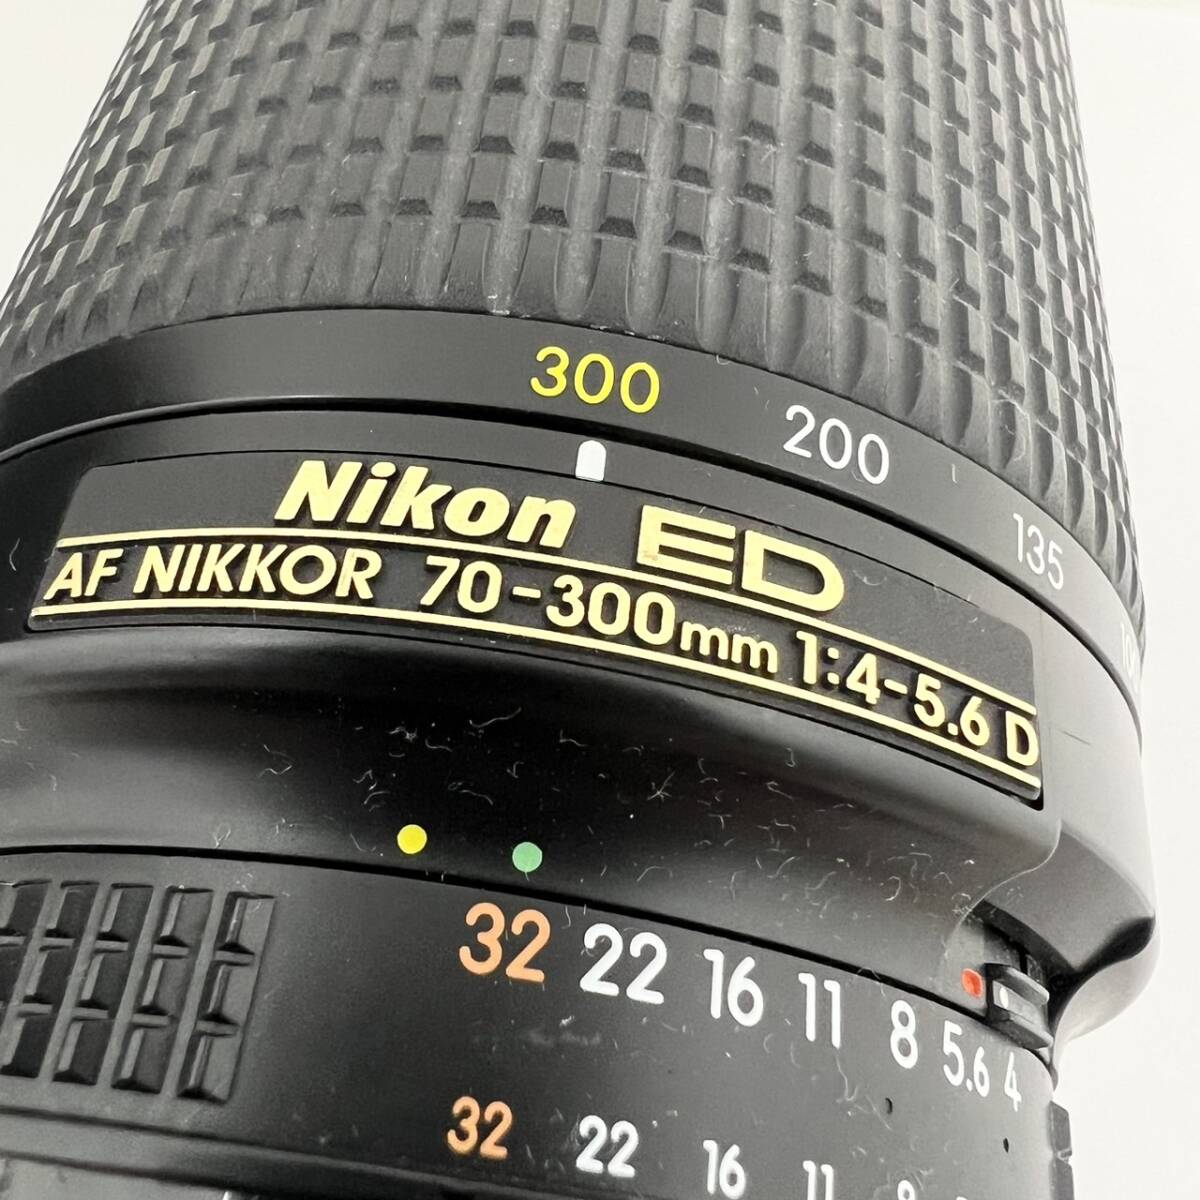 15723/ Nikon ED AF NIKKOR 70-300mm 1:4-5.6D CAMERA LENS ニコン カメラレンズ 写の画像5